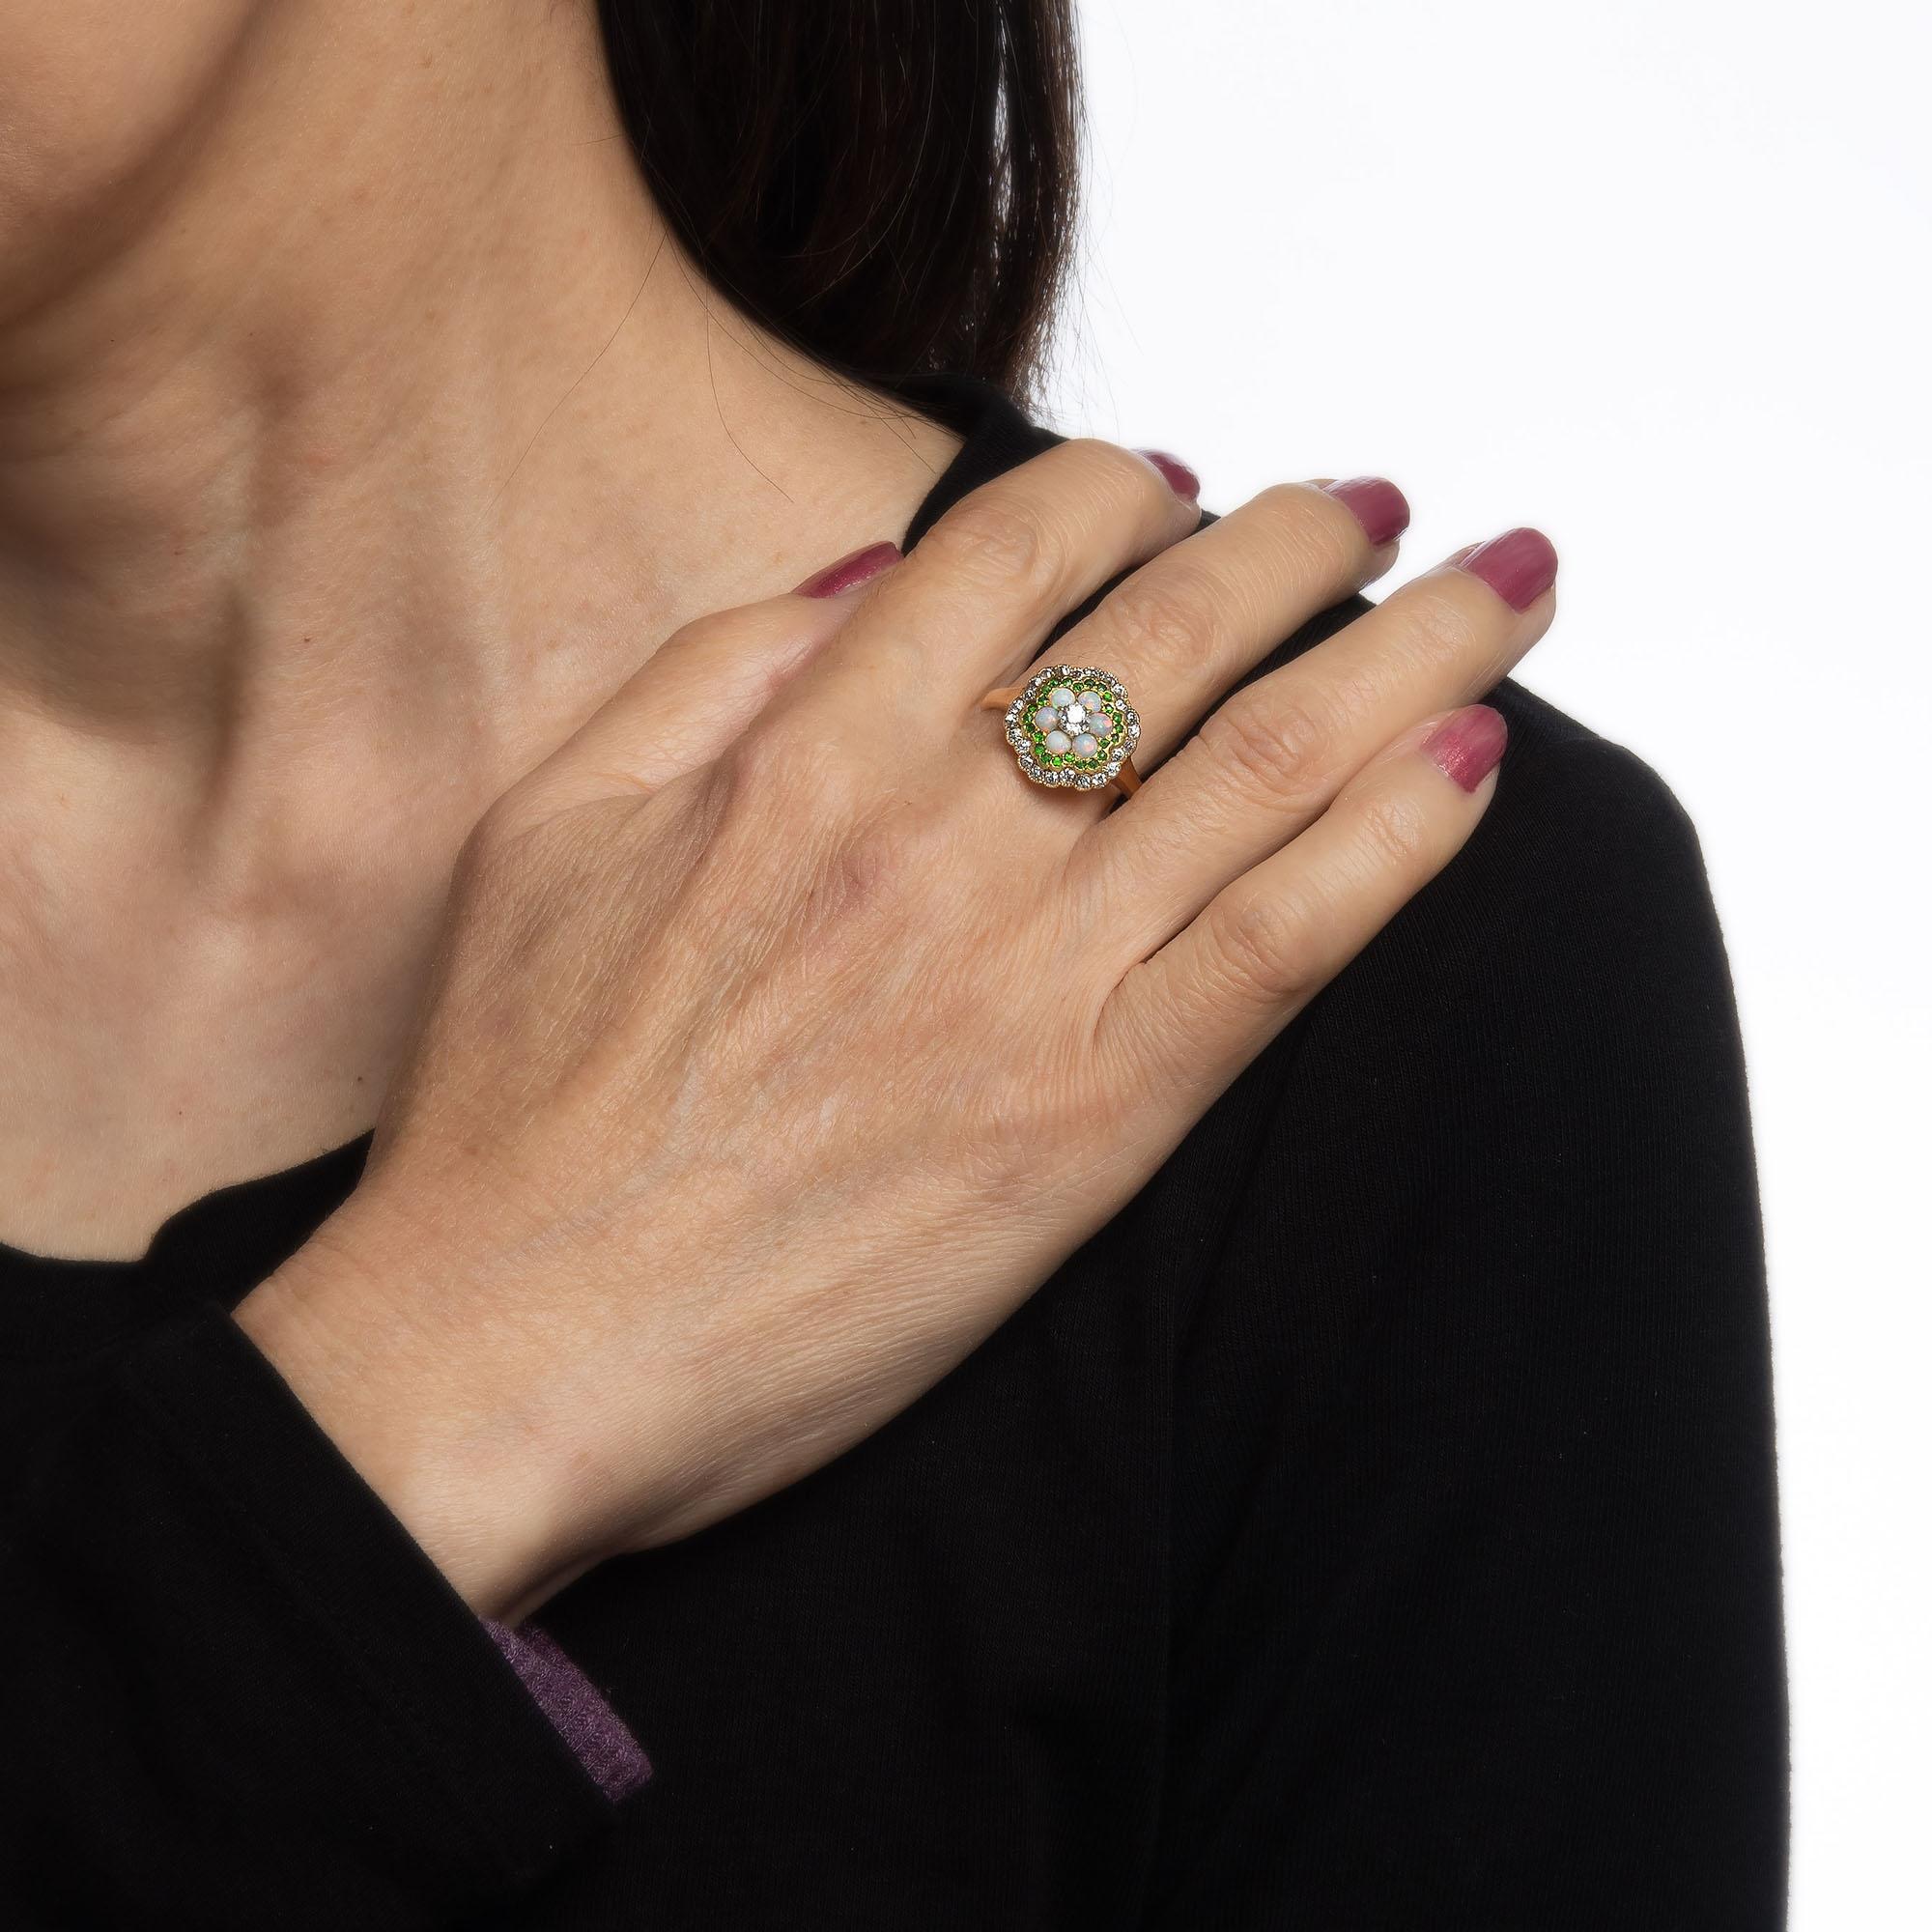 Antique Edwardian Opal Diamond Ring Demantoid Garnet 18k Yellow Gold Jewelry 1